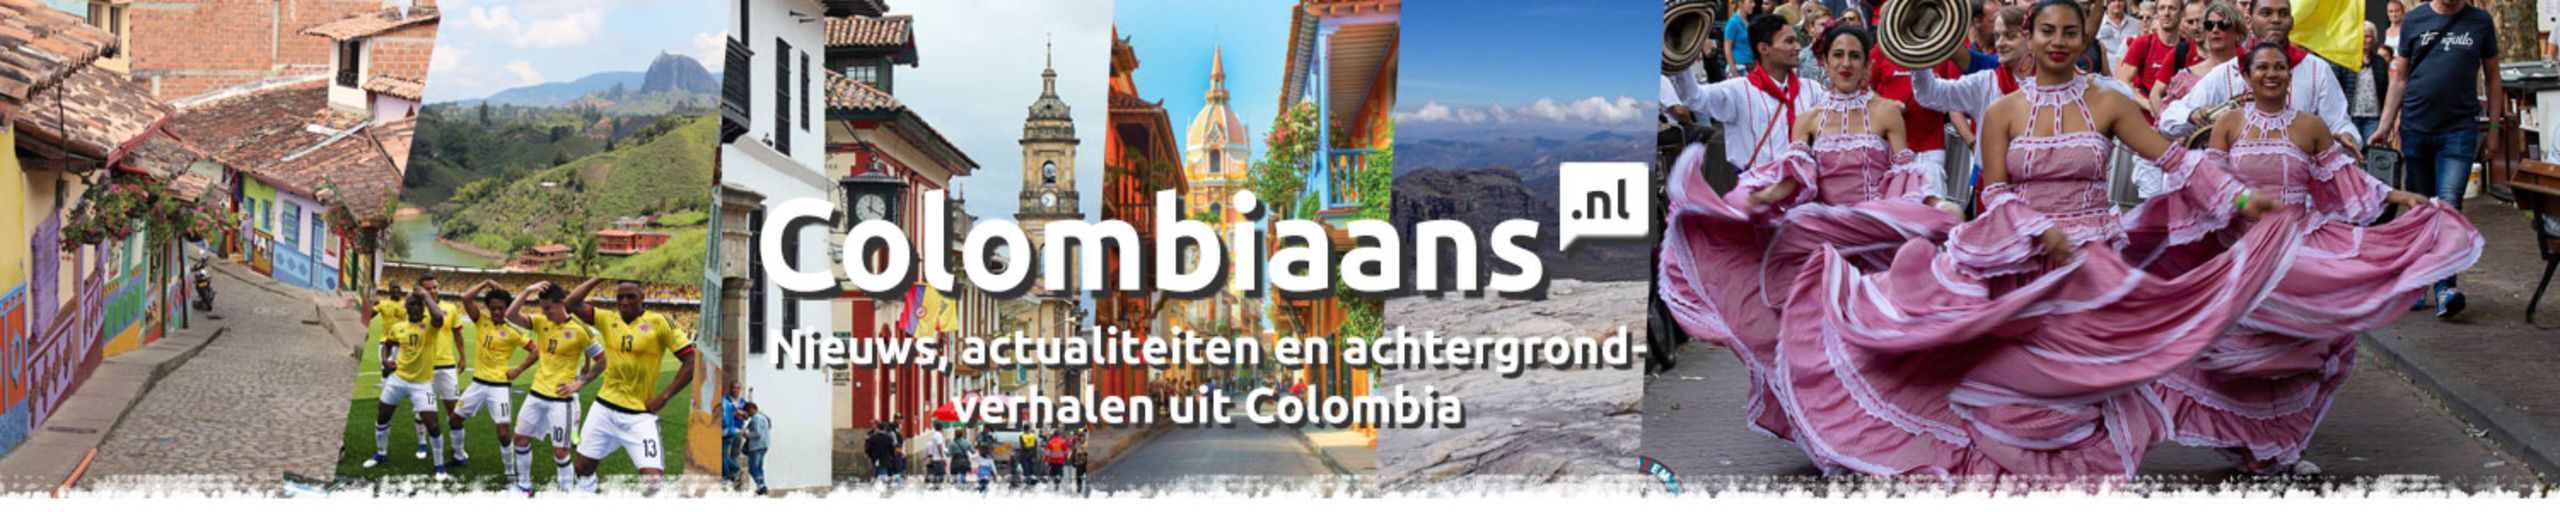 colombiaans.nl